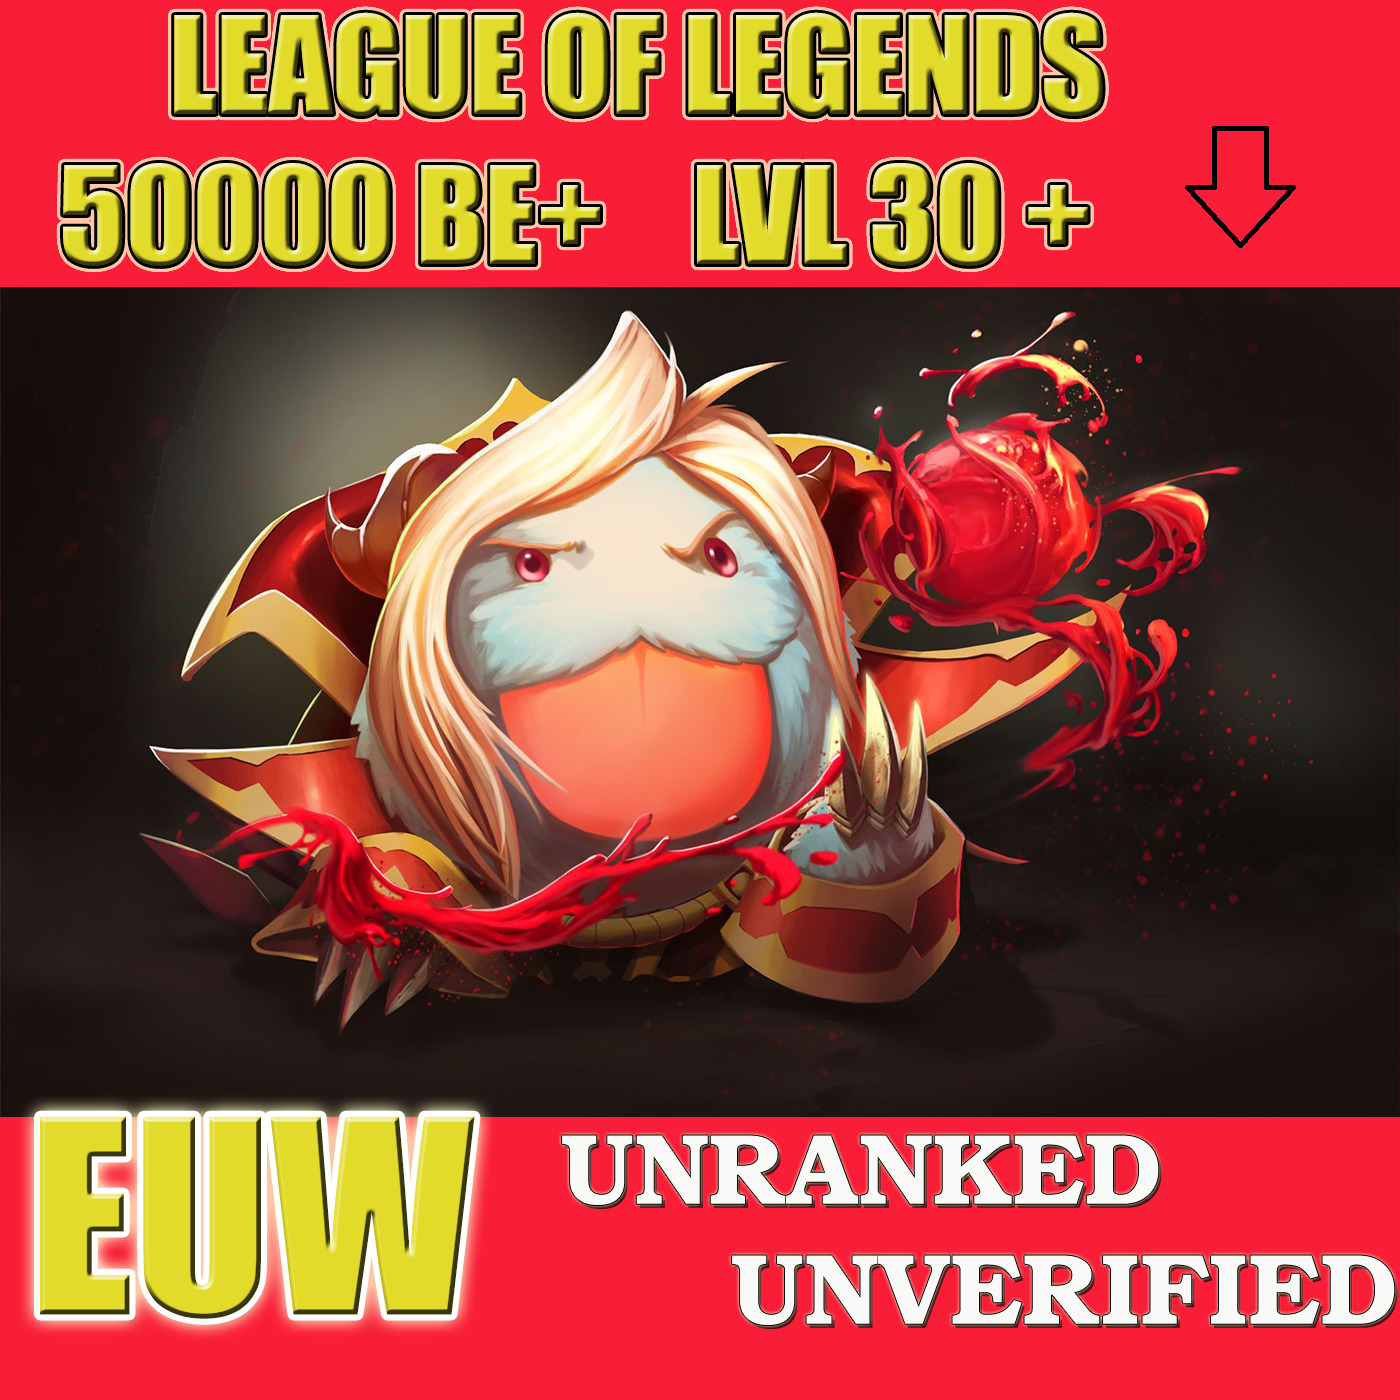 EUW 🥇 Acc Lol Smurf league of legens 45-50K Lvl30 Unranked Unverified